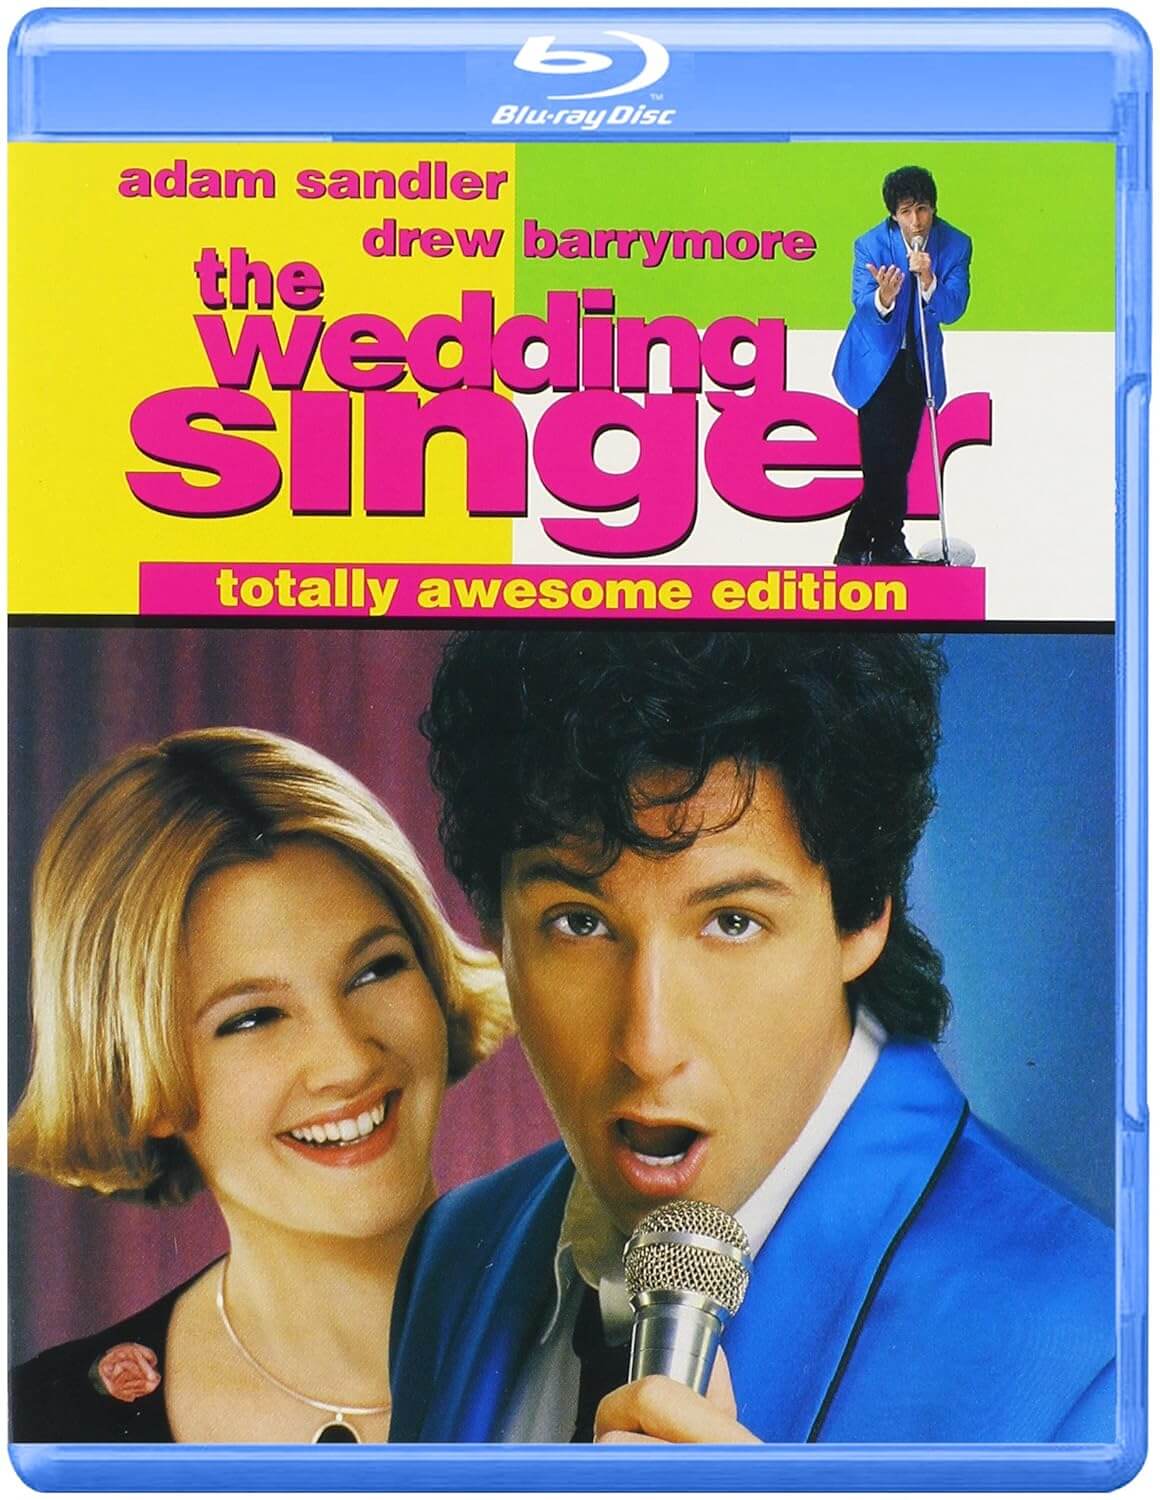 "The Wedding Singer" (1998)